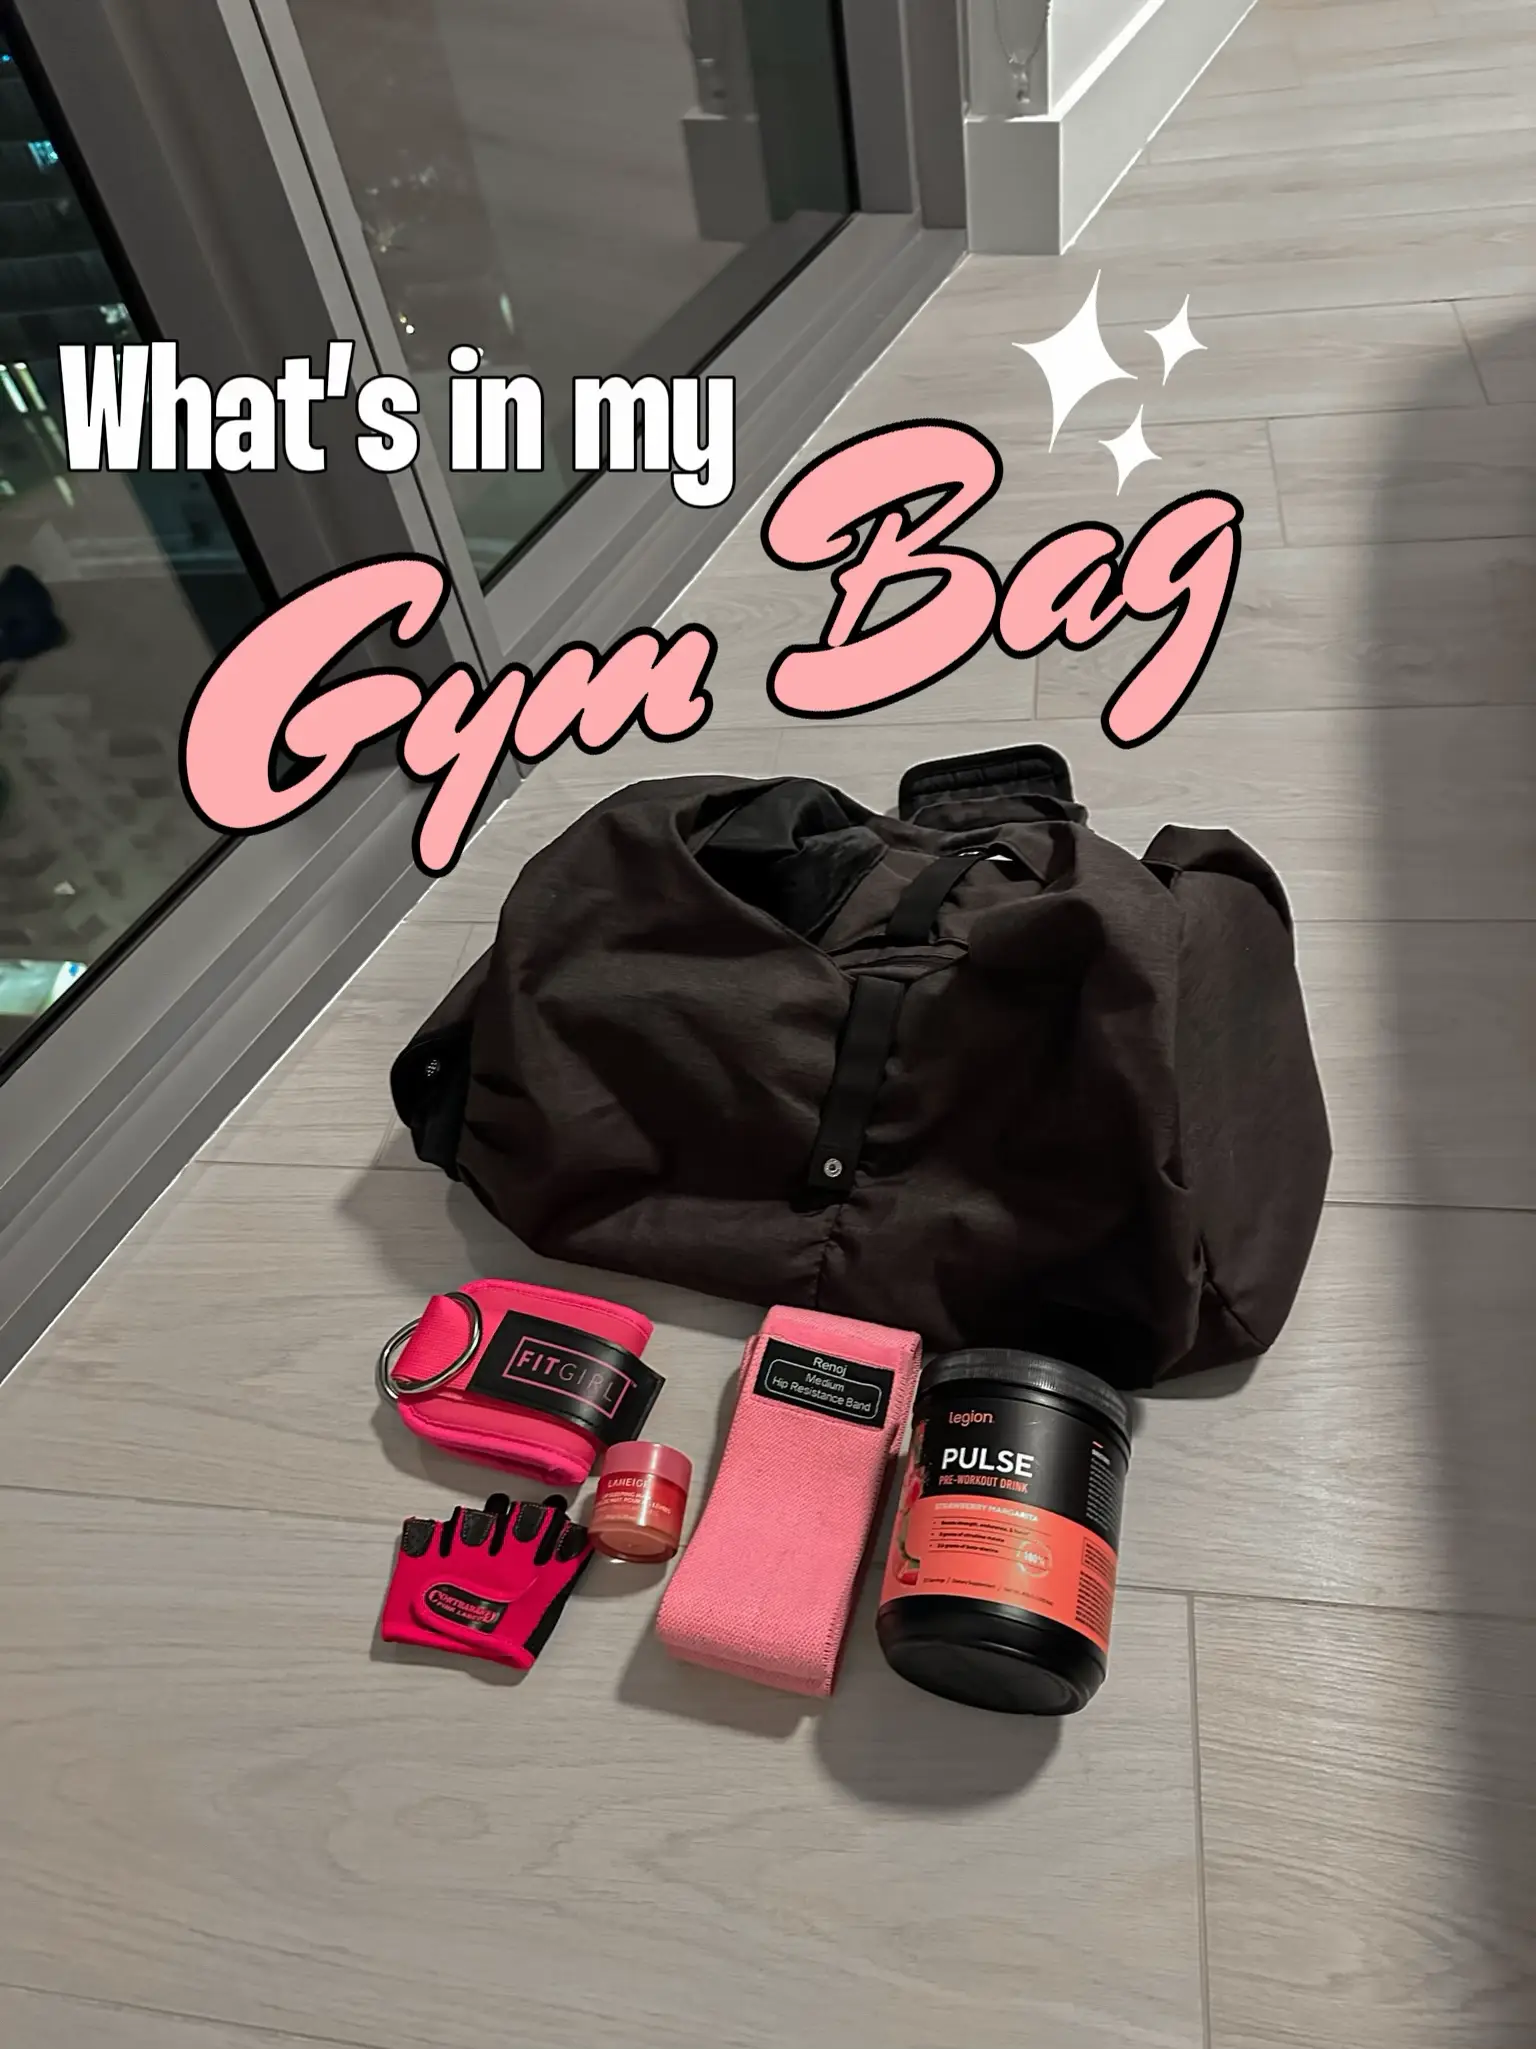 My gym essentials 💗💅🏼 what's in your gym bag? I defs need a cute li